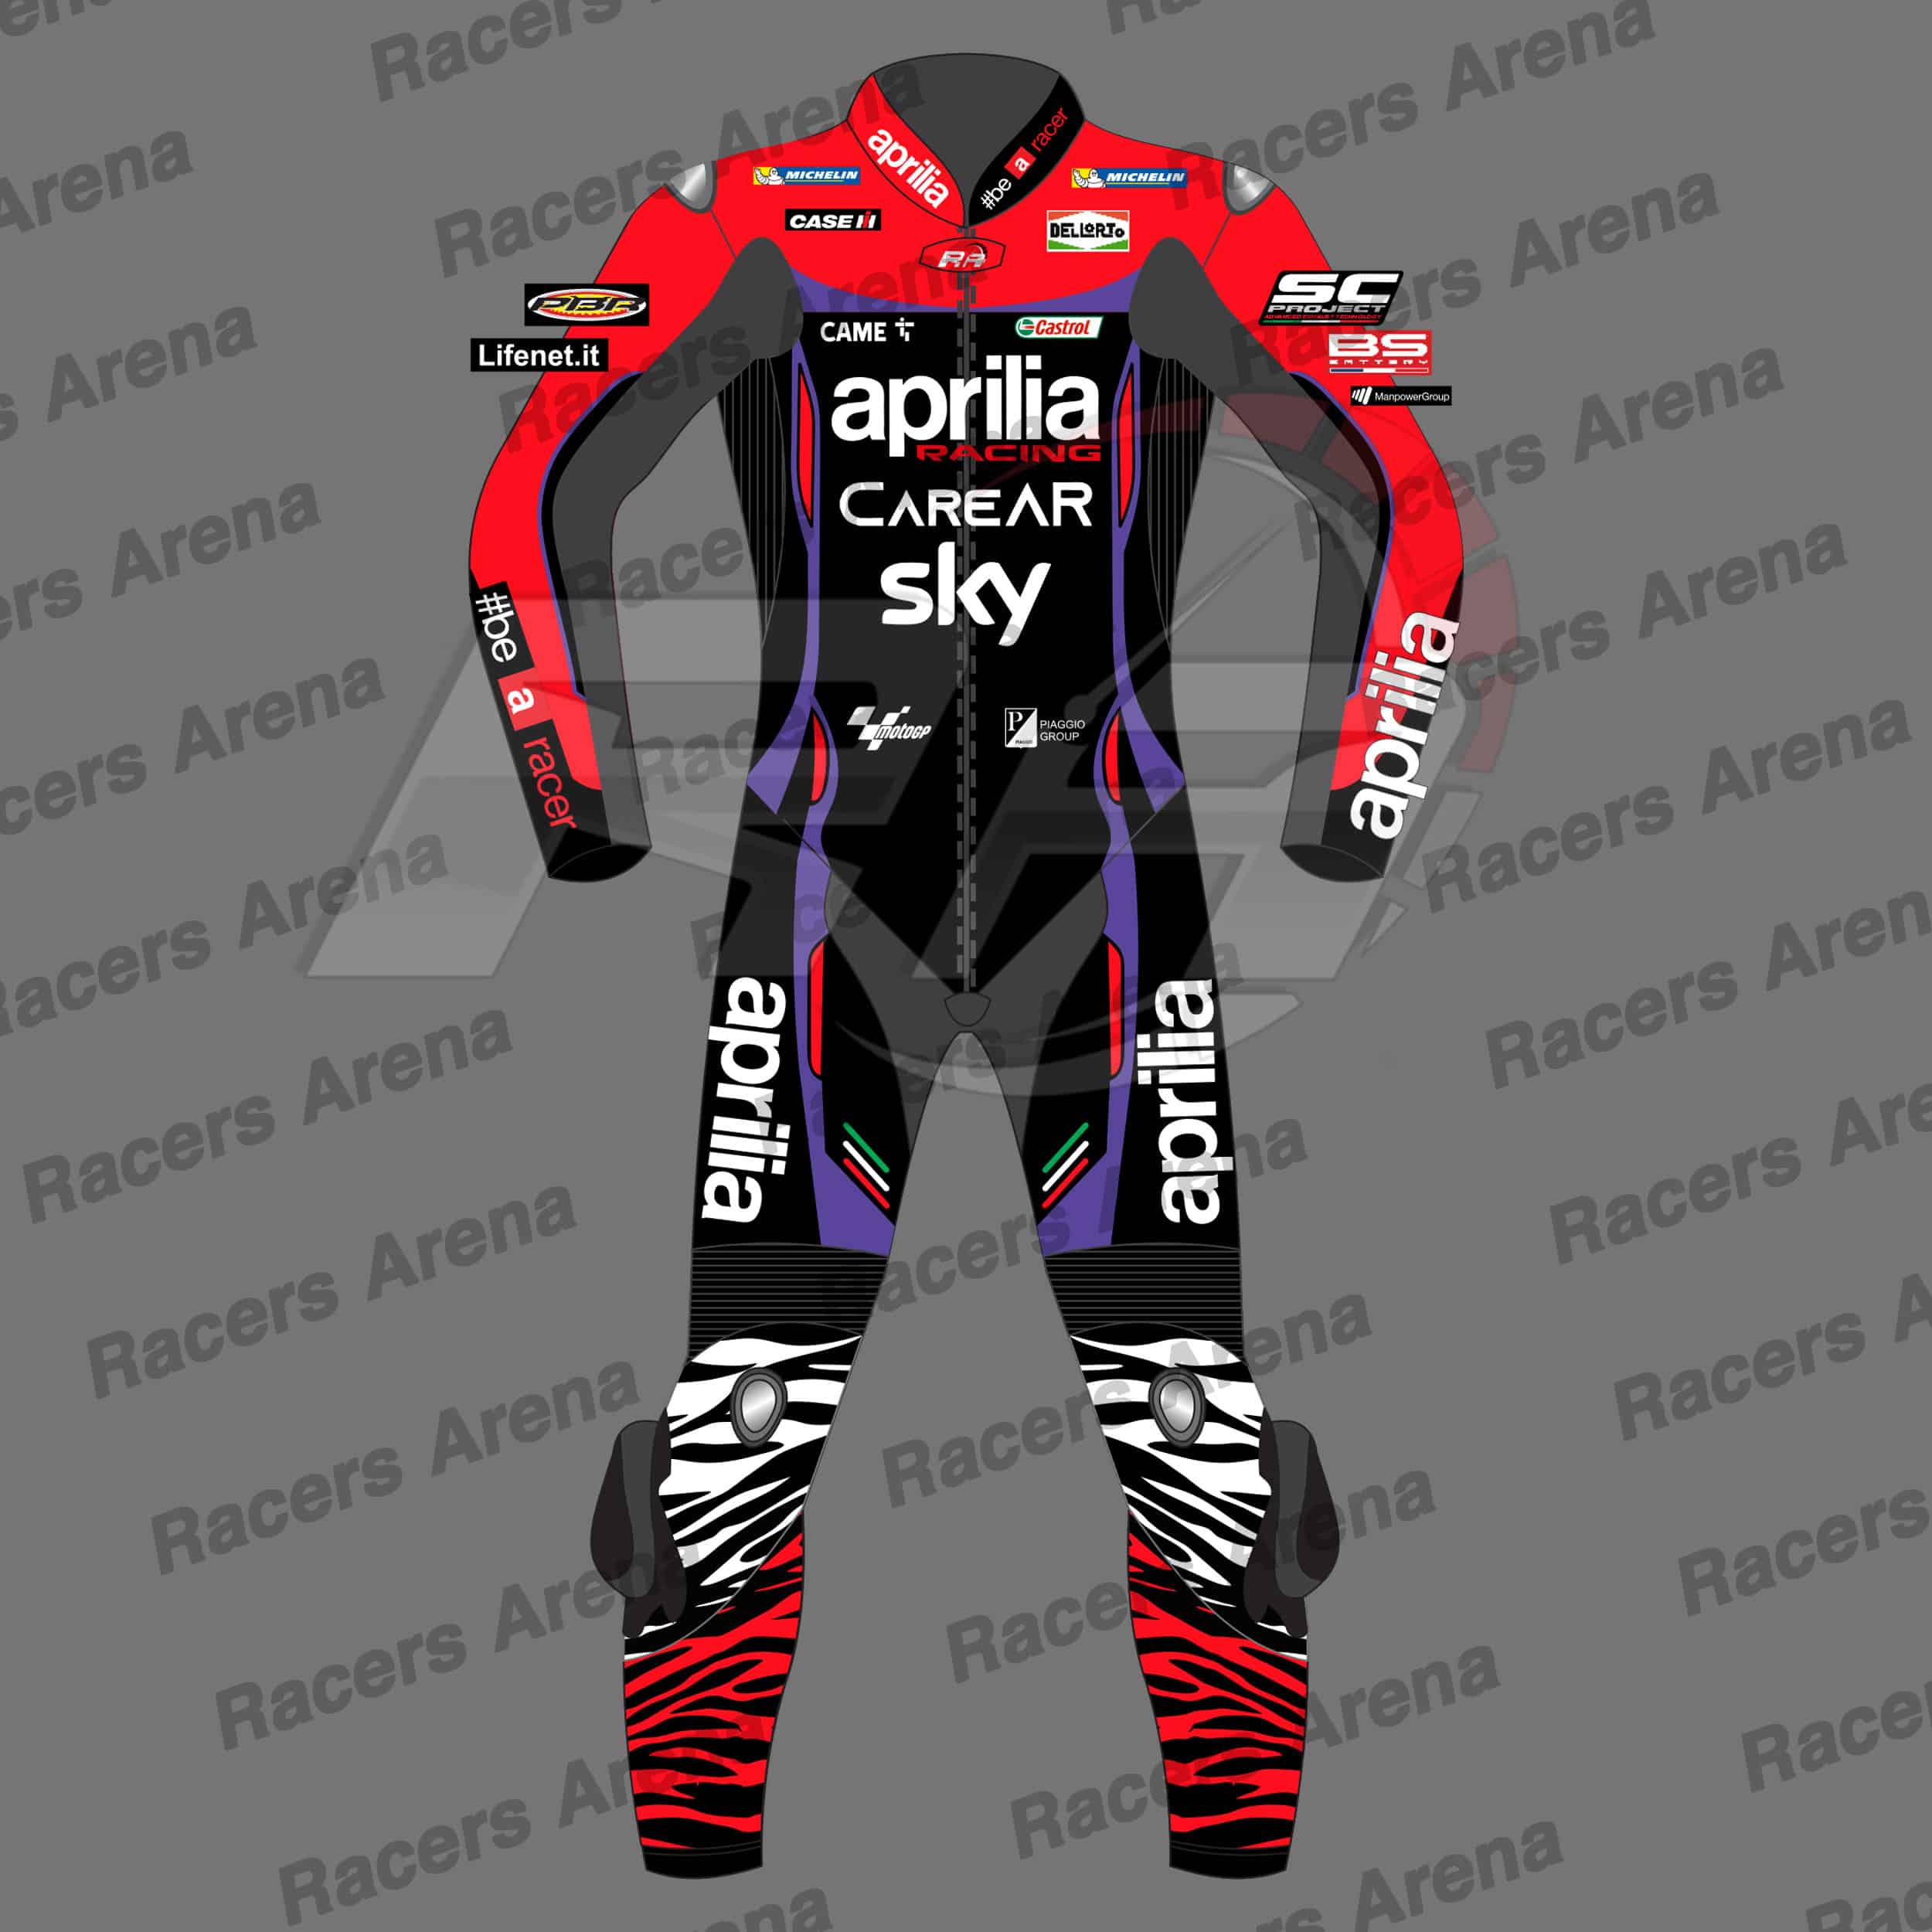 Aleix Espargaro MotoGP 2023 Aprilia Racing Suit – Racers Arena